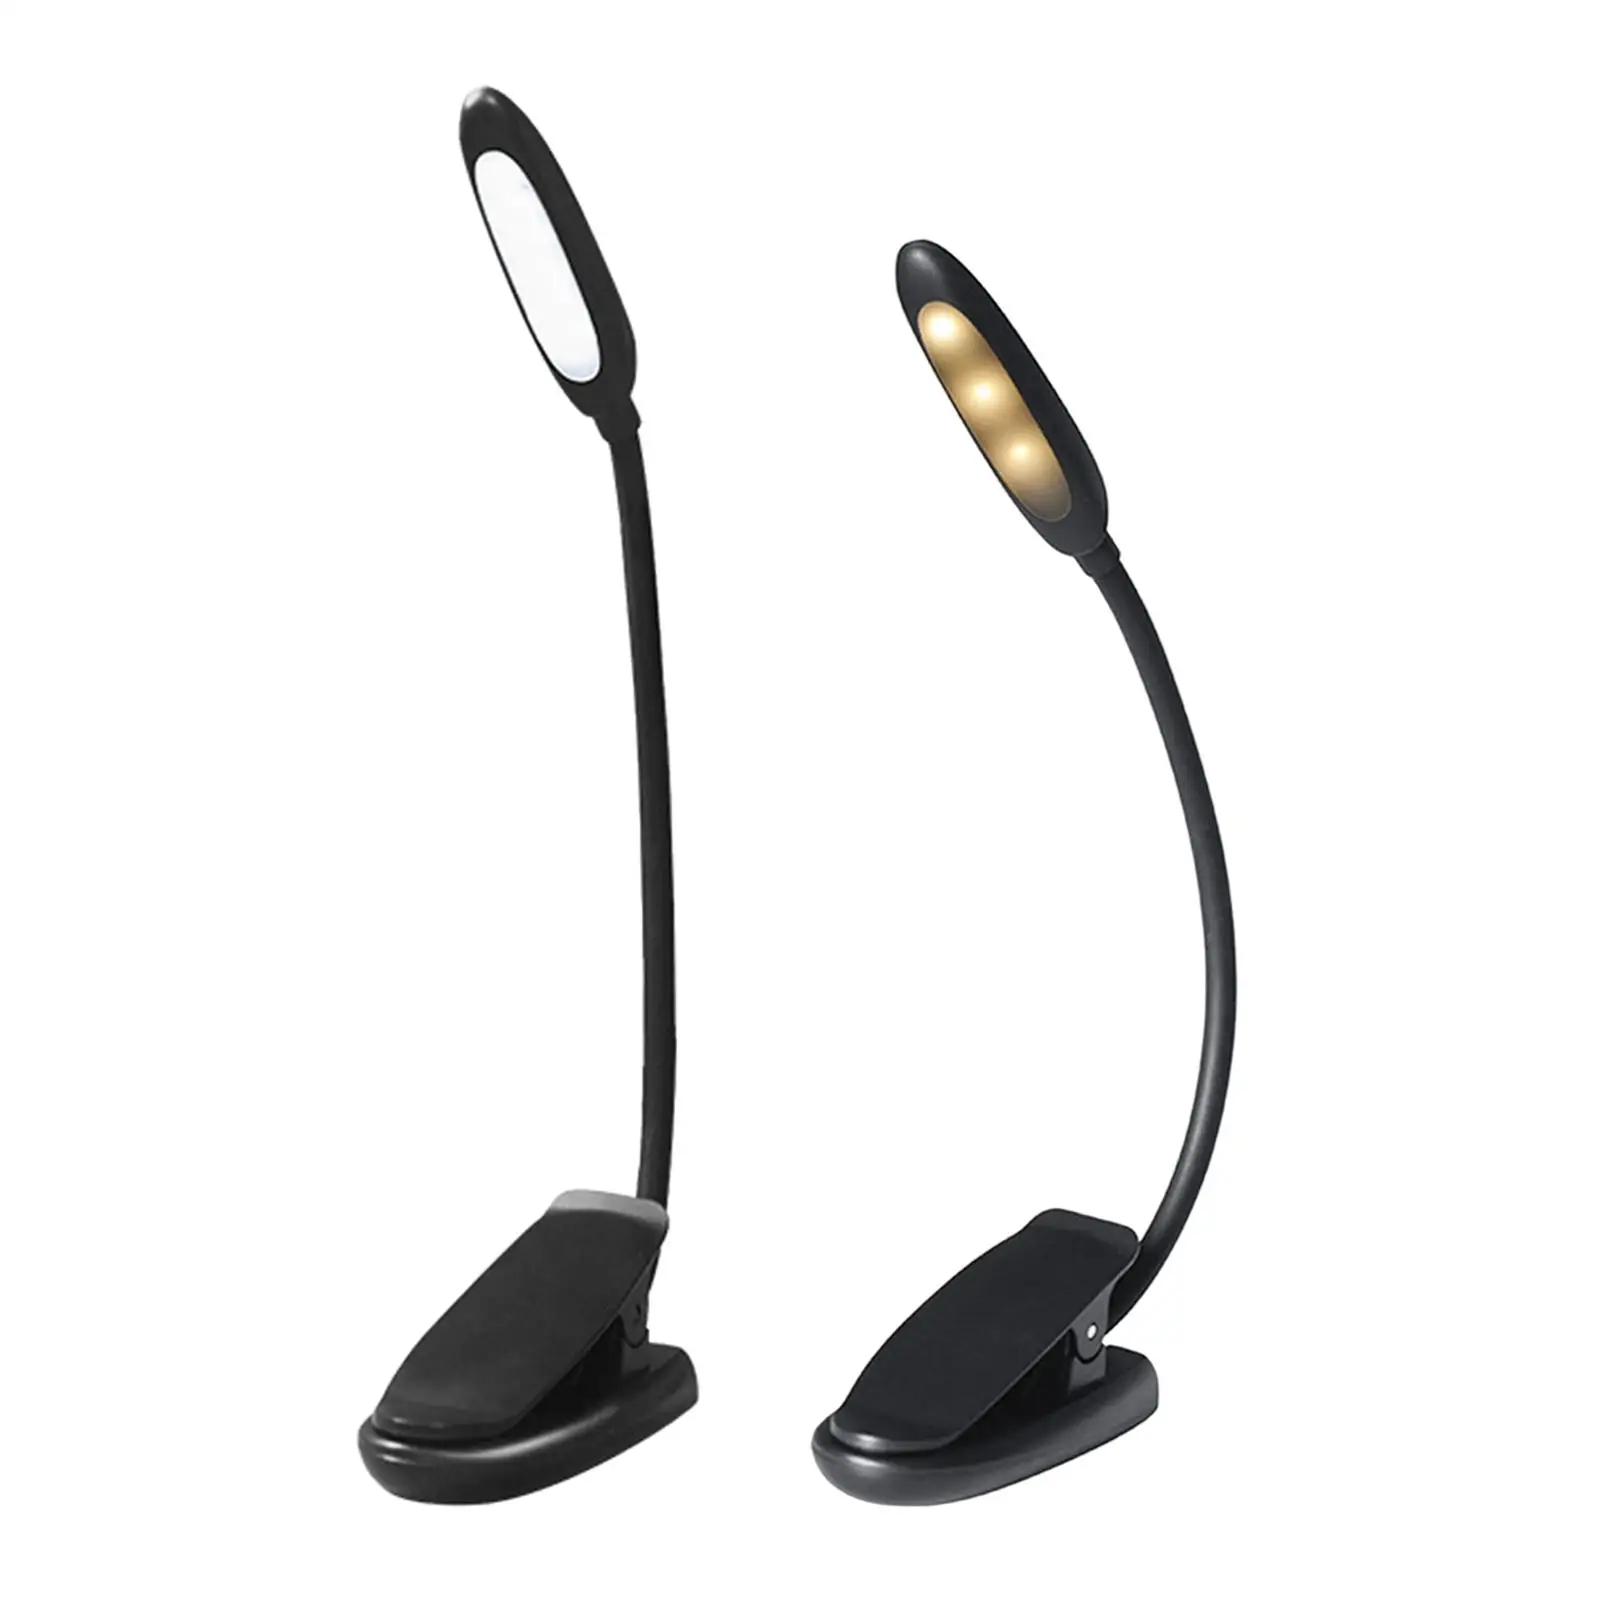 Mini LED Desk Lamp USB Rechargeable Eye Protection Night light Reading Clip On Light for Office Bedside Bedroom Home Dorm